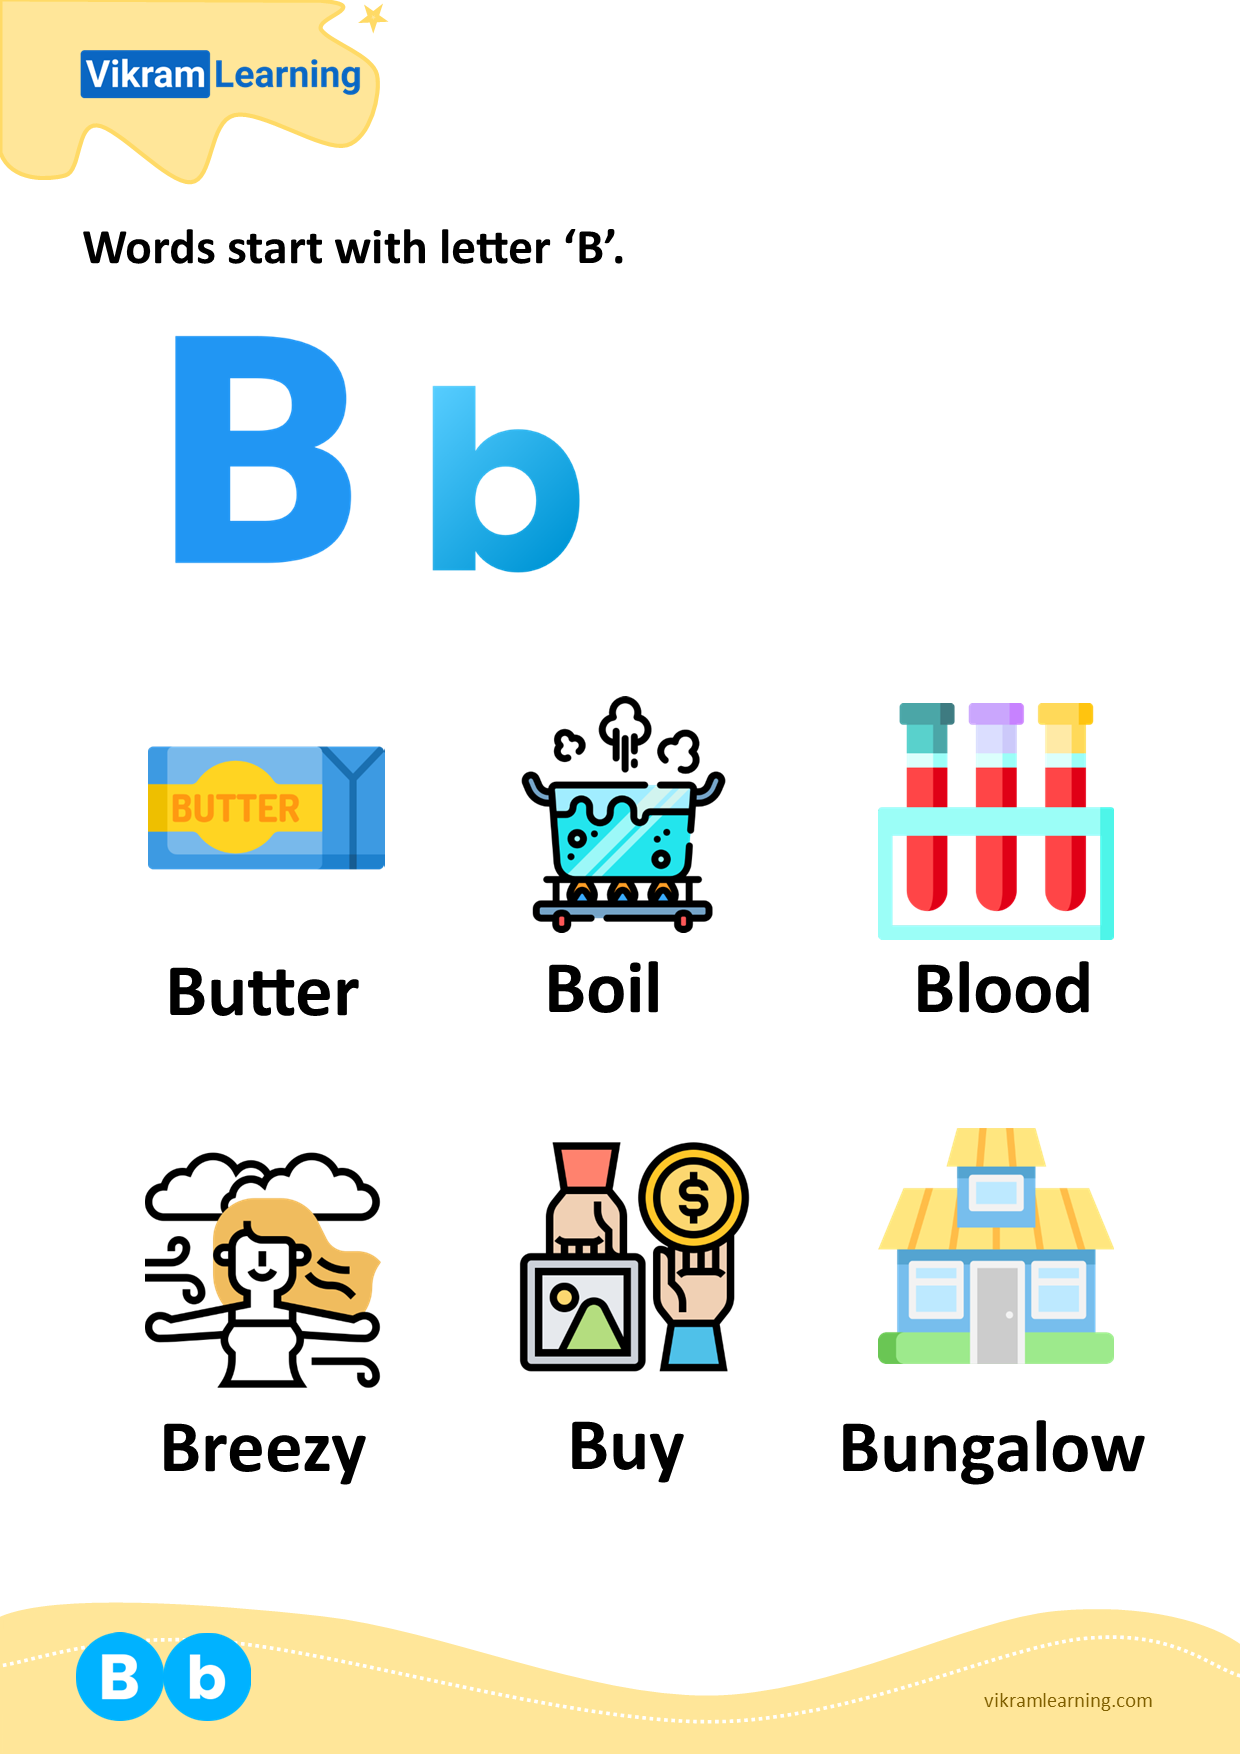 Download words start with letter 'b' worksheets